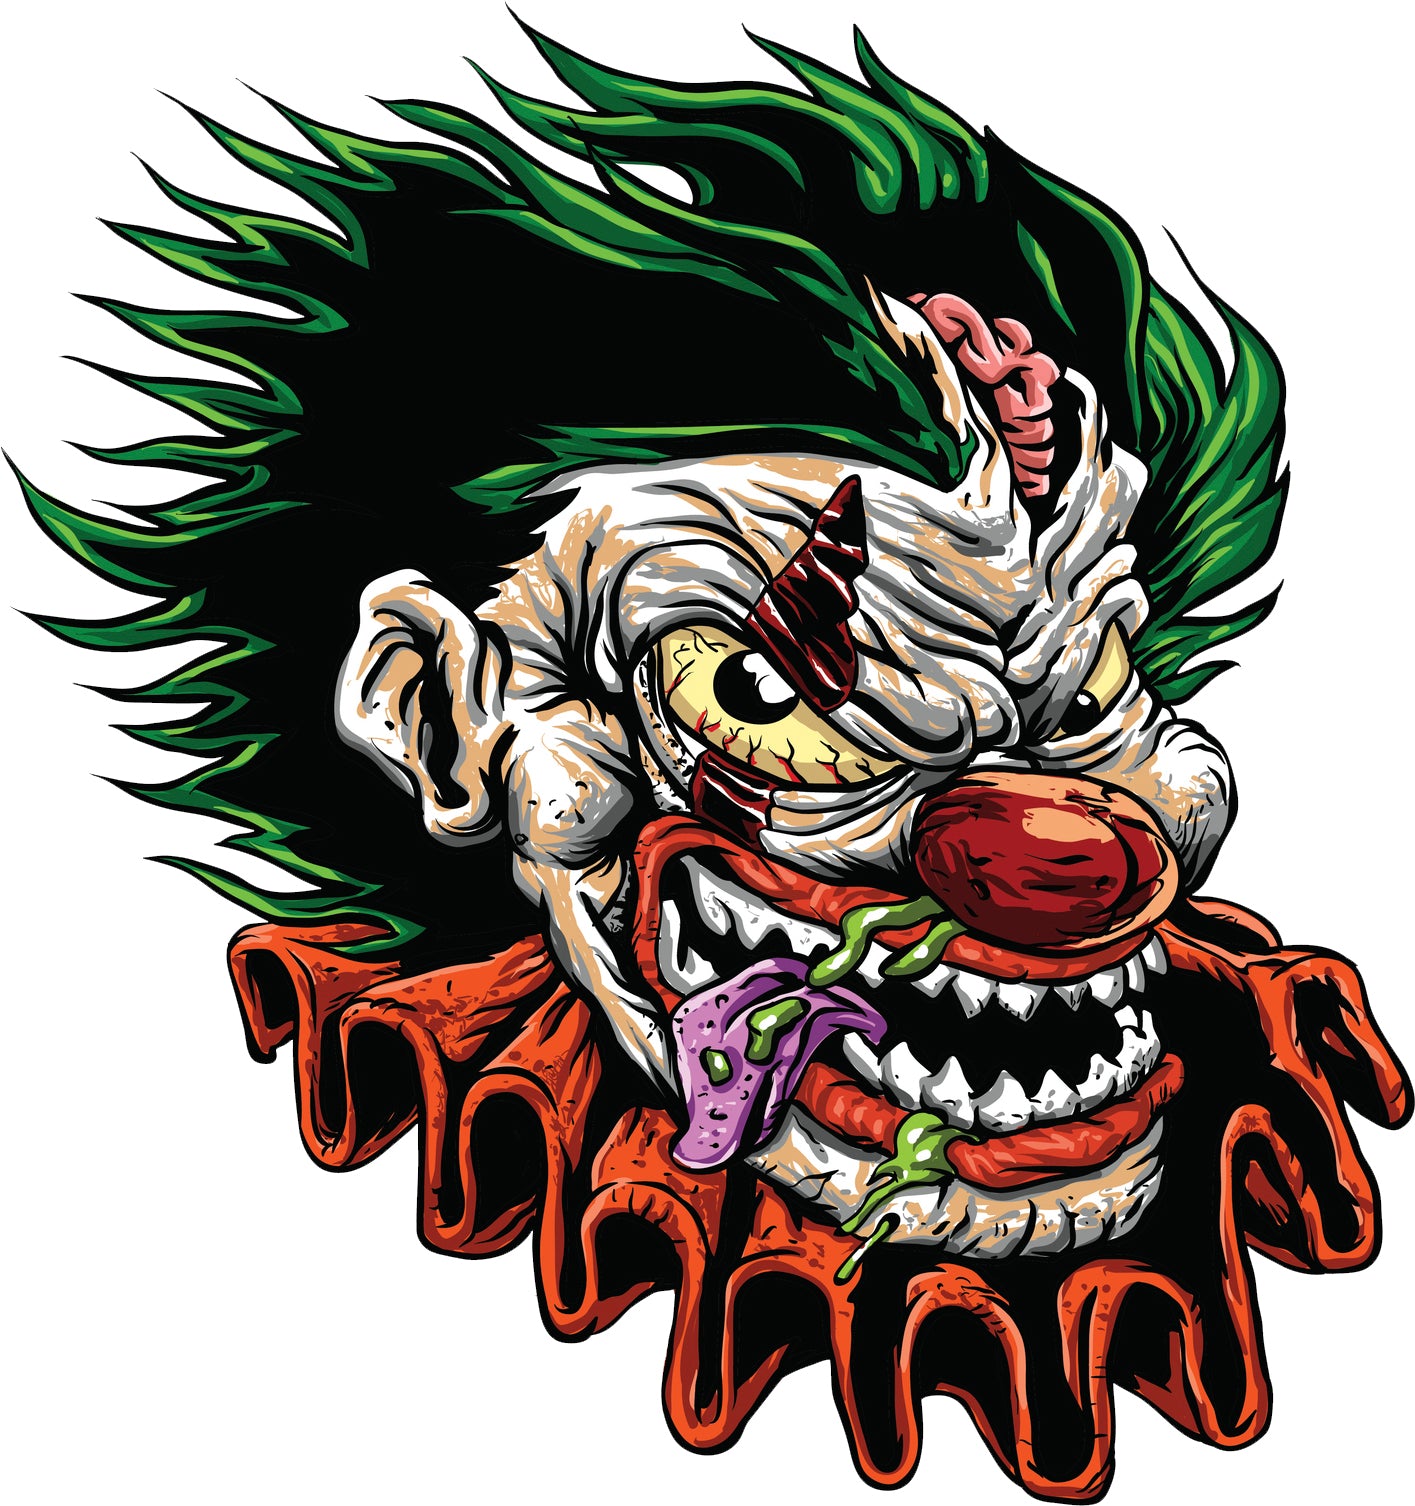 Creepy Undead Dead Zombie Clown Cartoon Vinyl Decal Sticker